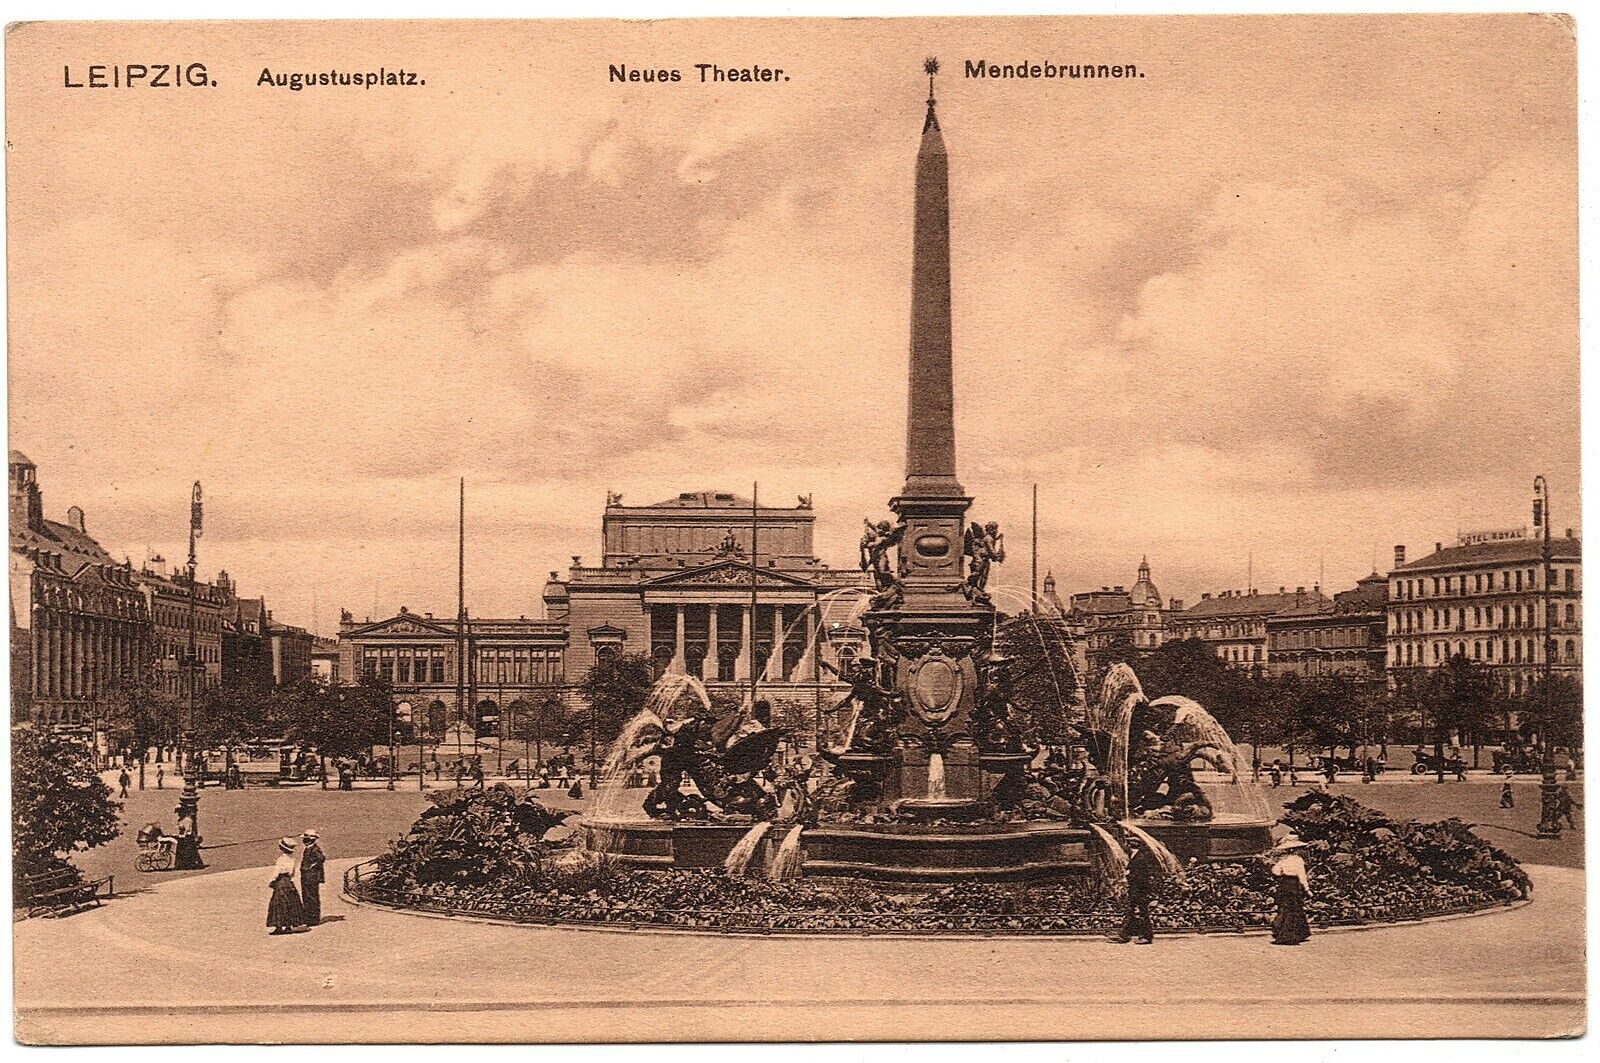 LEIPZIG Augustusplatz Neues Theater Mendebrunnen Vintage Postcard Germany